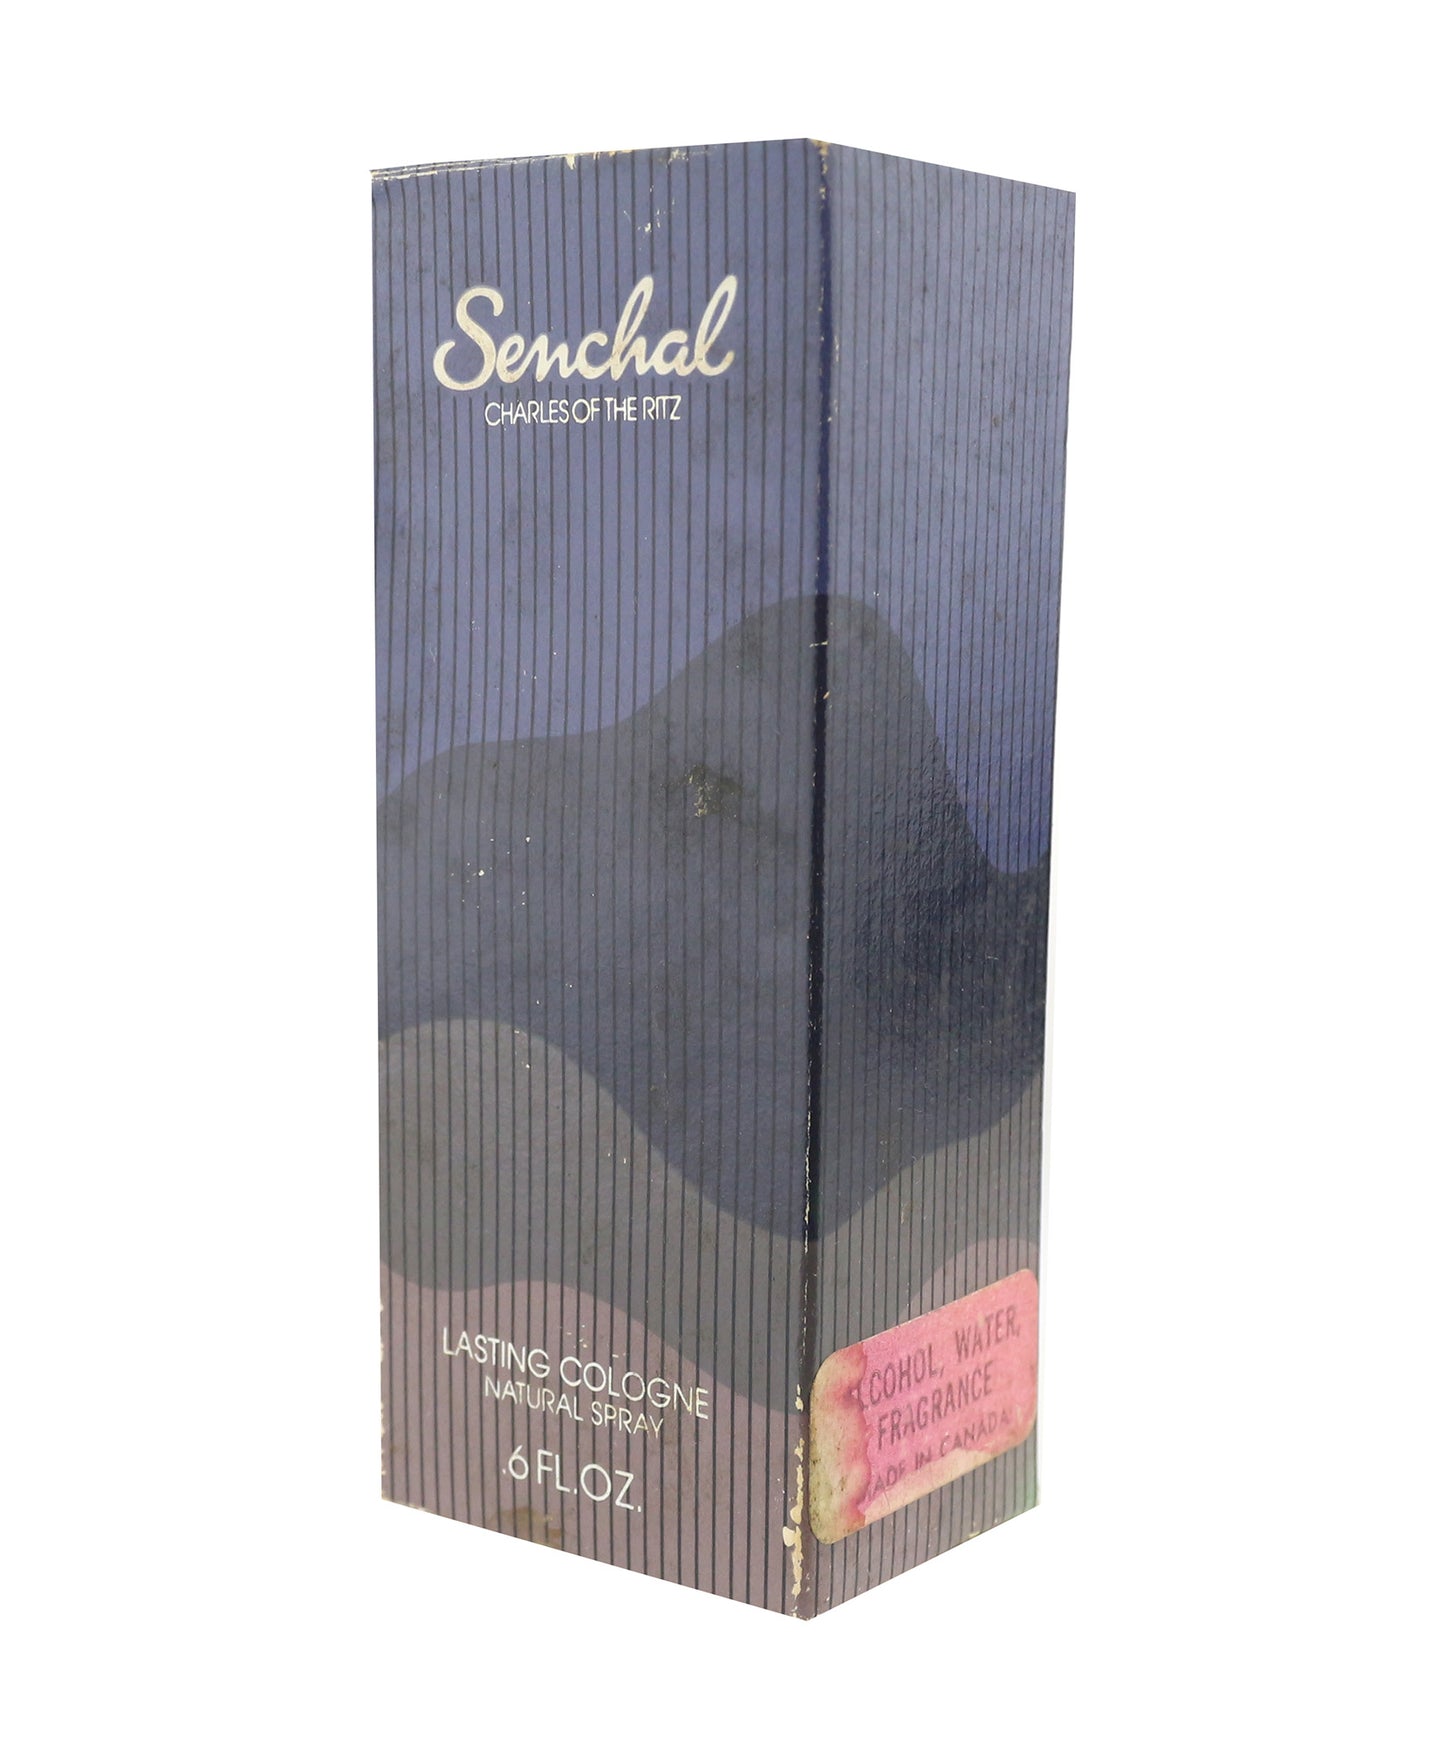 Charles Of The Ritz Senchal Lasting Cologne Natural Spray 0.6Oz In Box (Vintage)